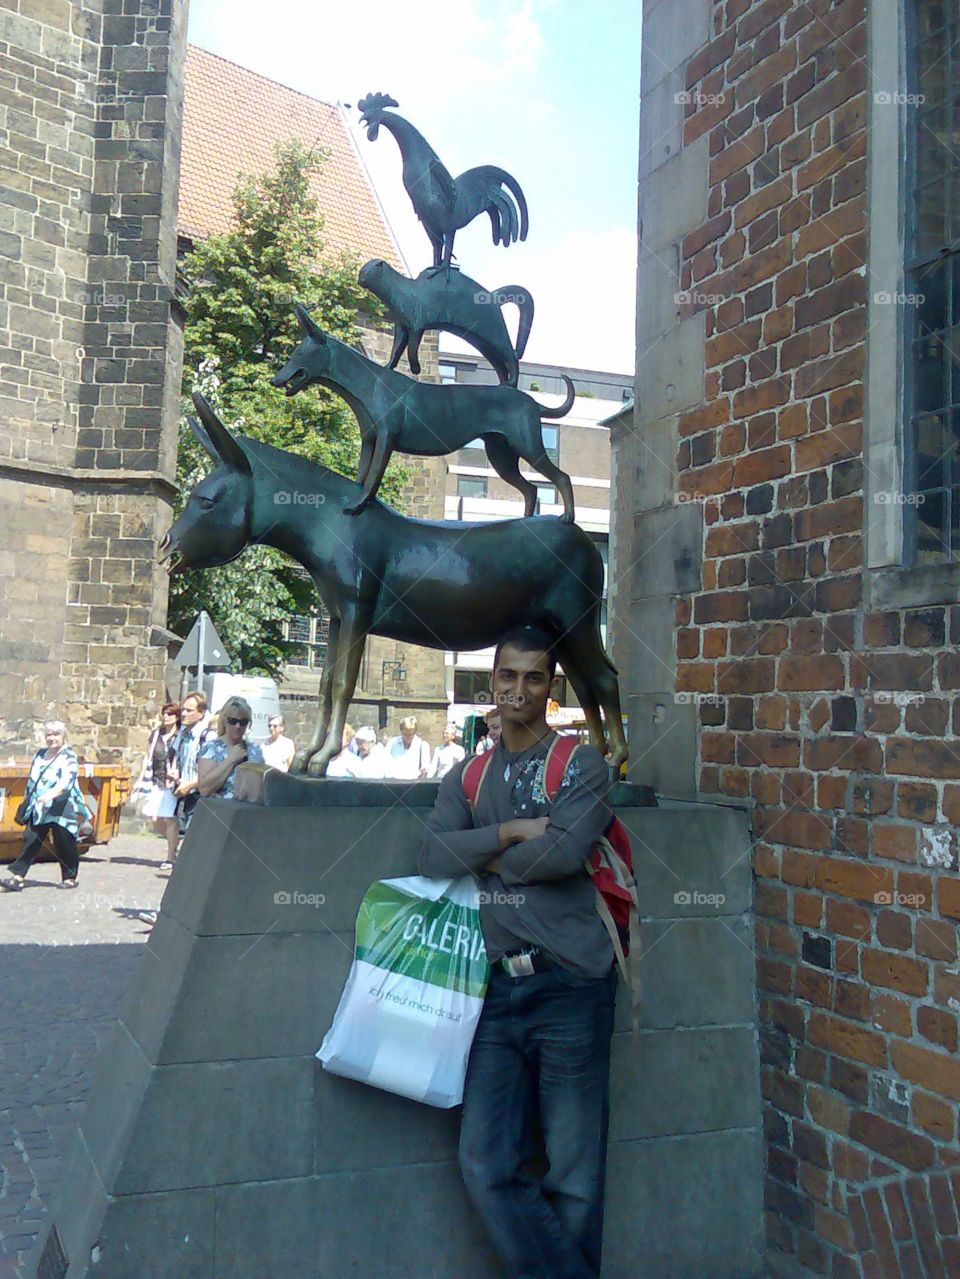 # Statue# It's me# Bremen# Belgium#